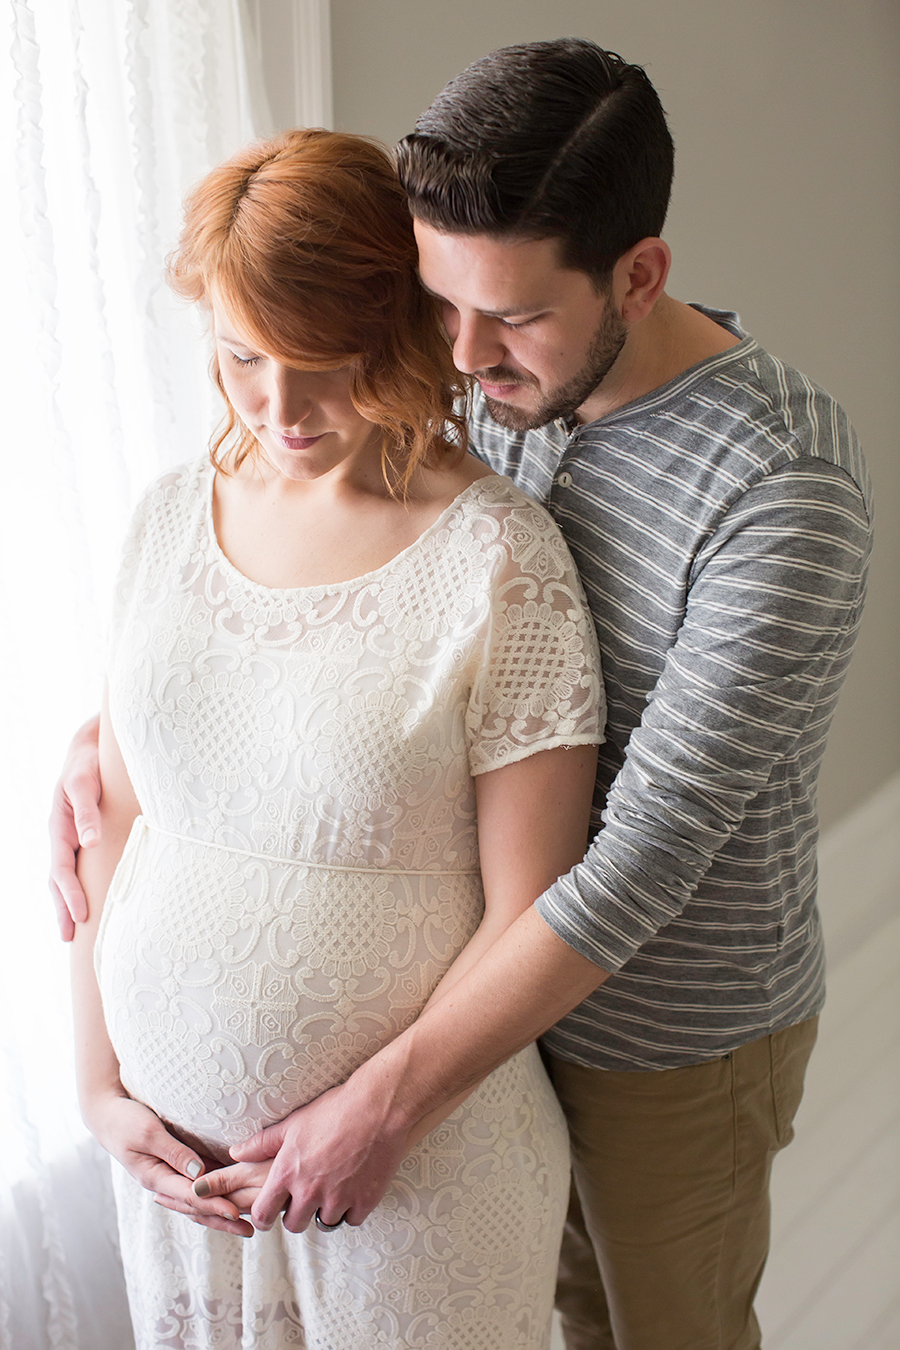 Roanoke Maternity Photographer | Whimsee Art Photography